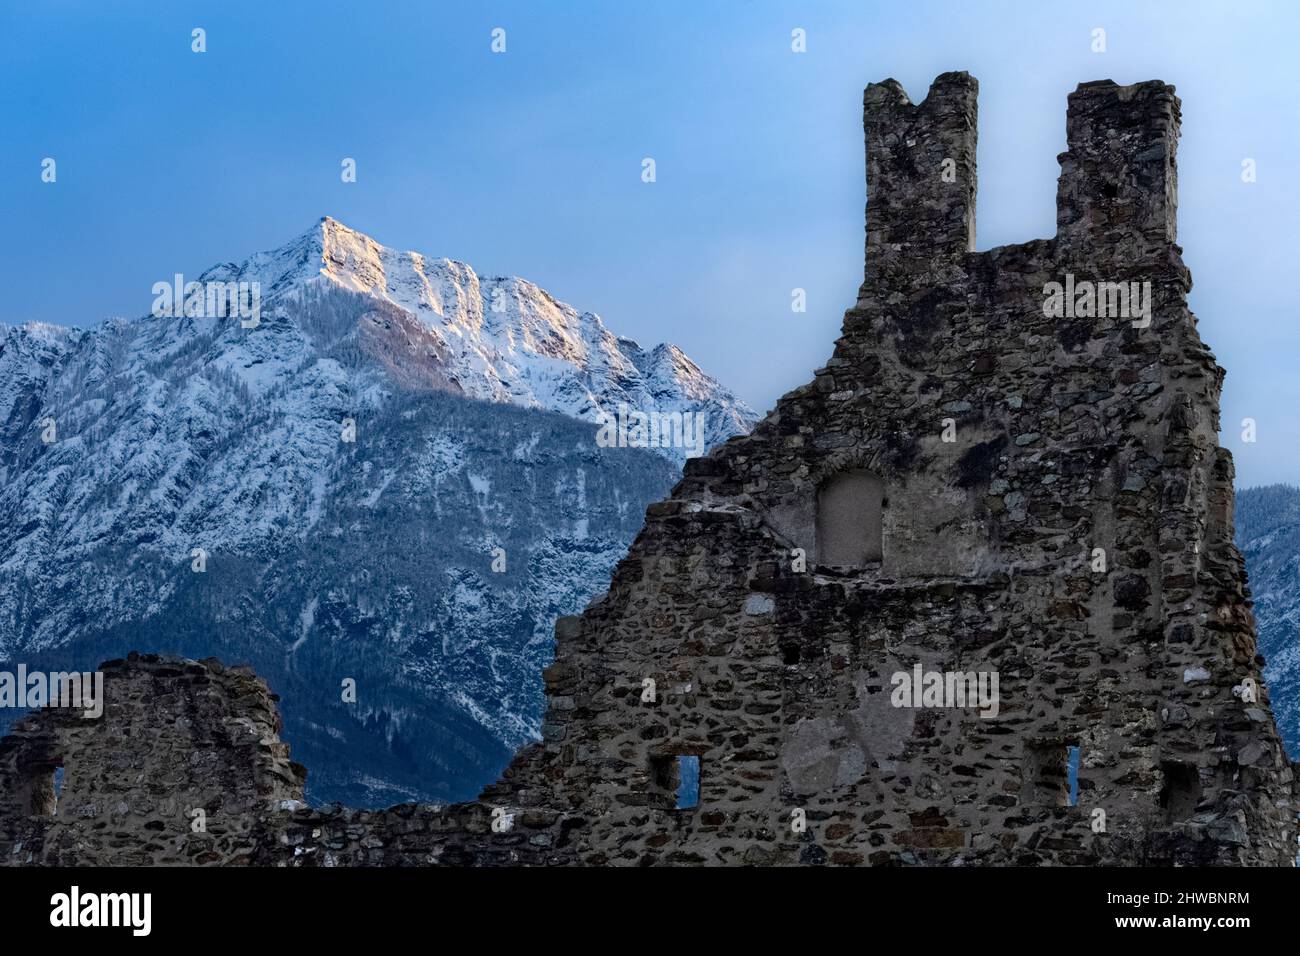 The crenellated ruins of Selva Castle and mount Cima Vezzena in winter. Levico Terme, Trento province, Trentino Alto-Adige, Italy, Europe. Stock Photo